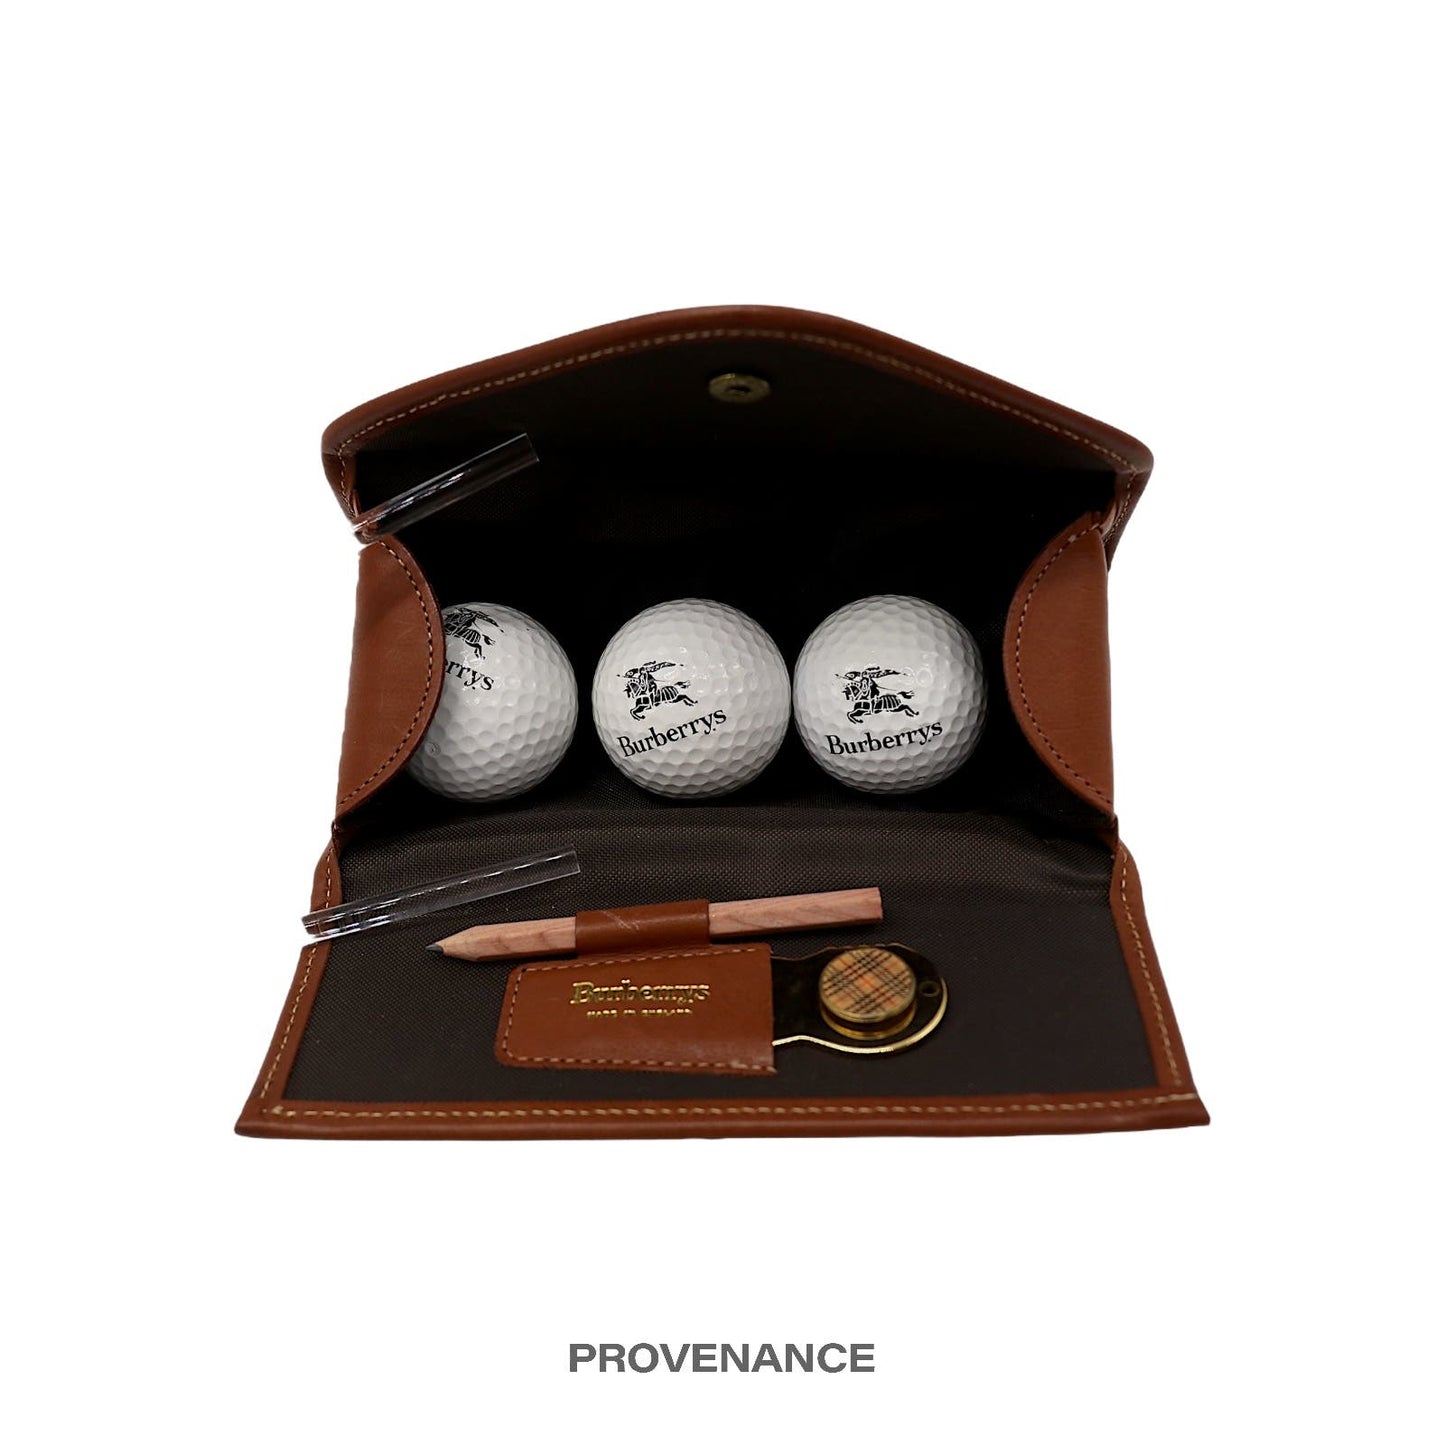 🔴 Burberry Golf Kit - "Burberrys" Nova Check